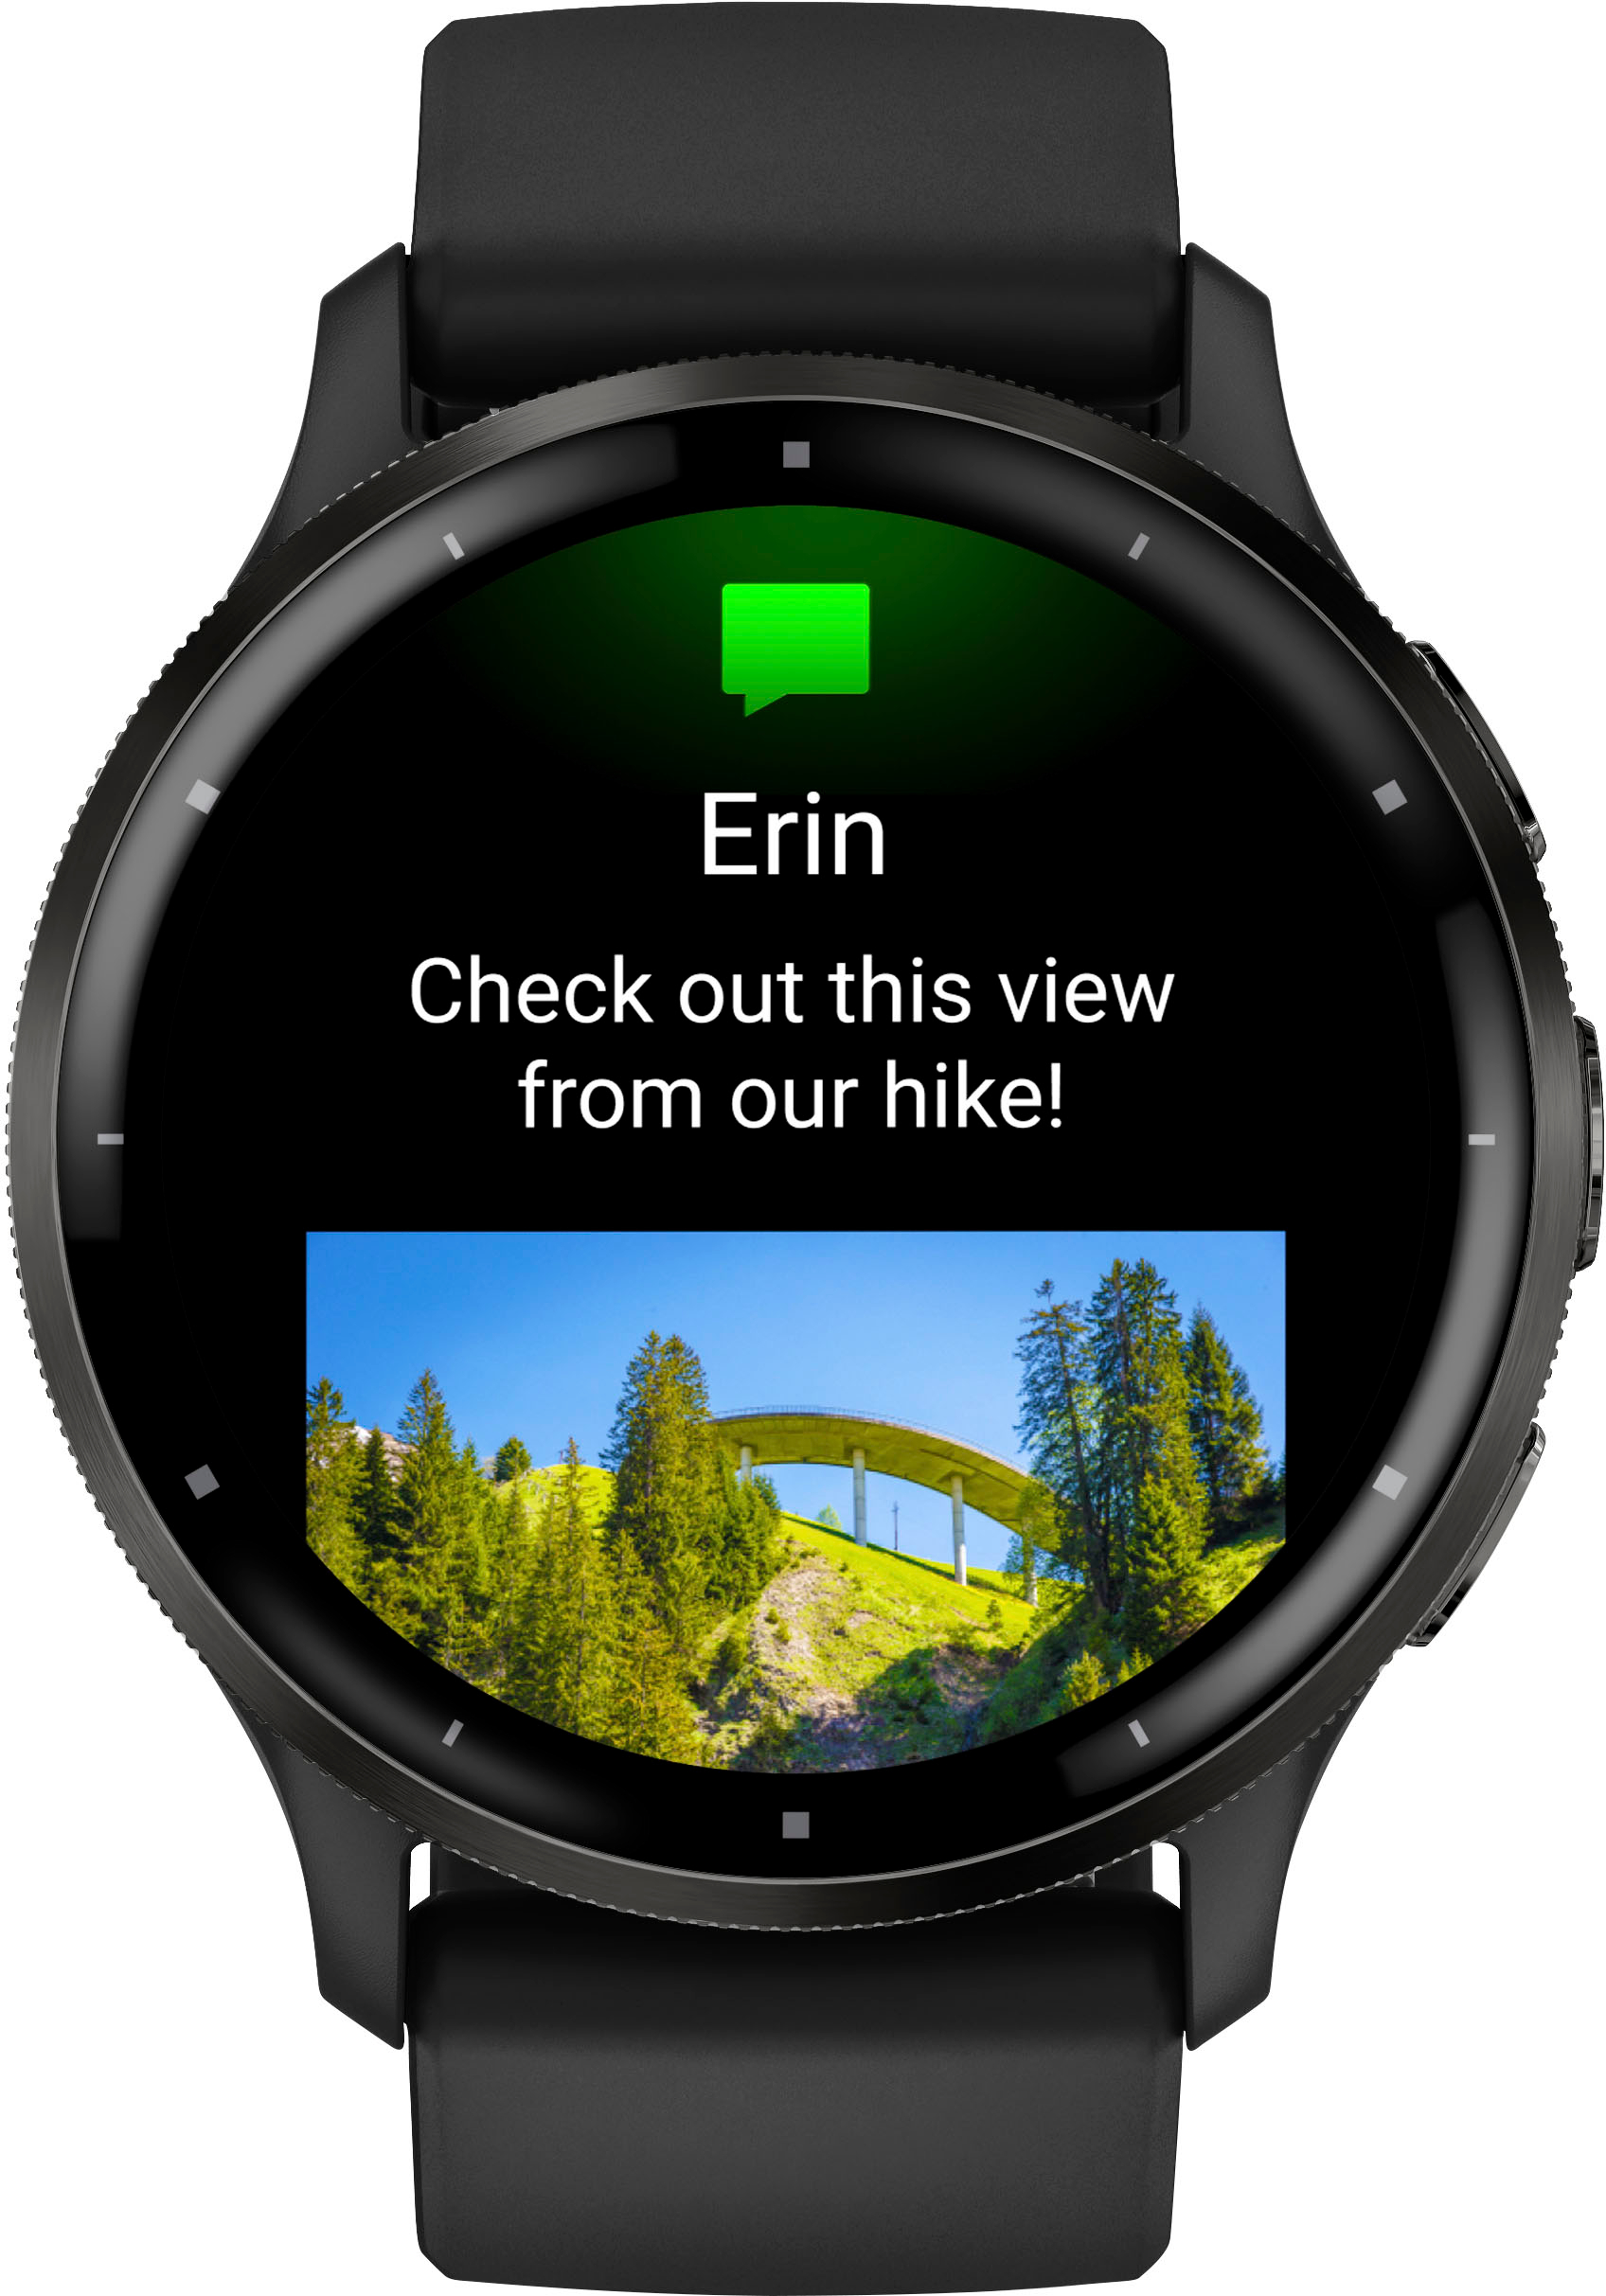 Garmin announces Venu 3 GPS smartwatches